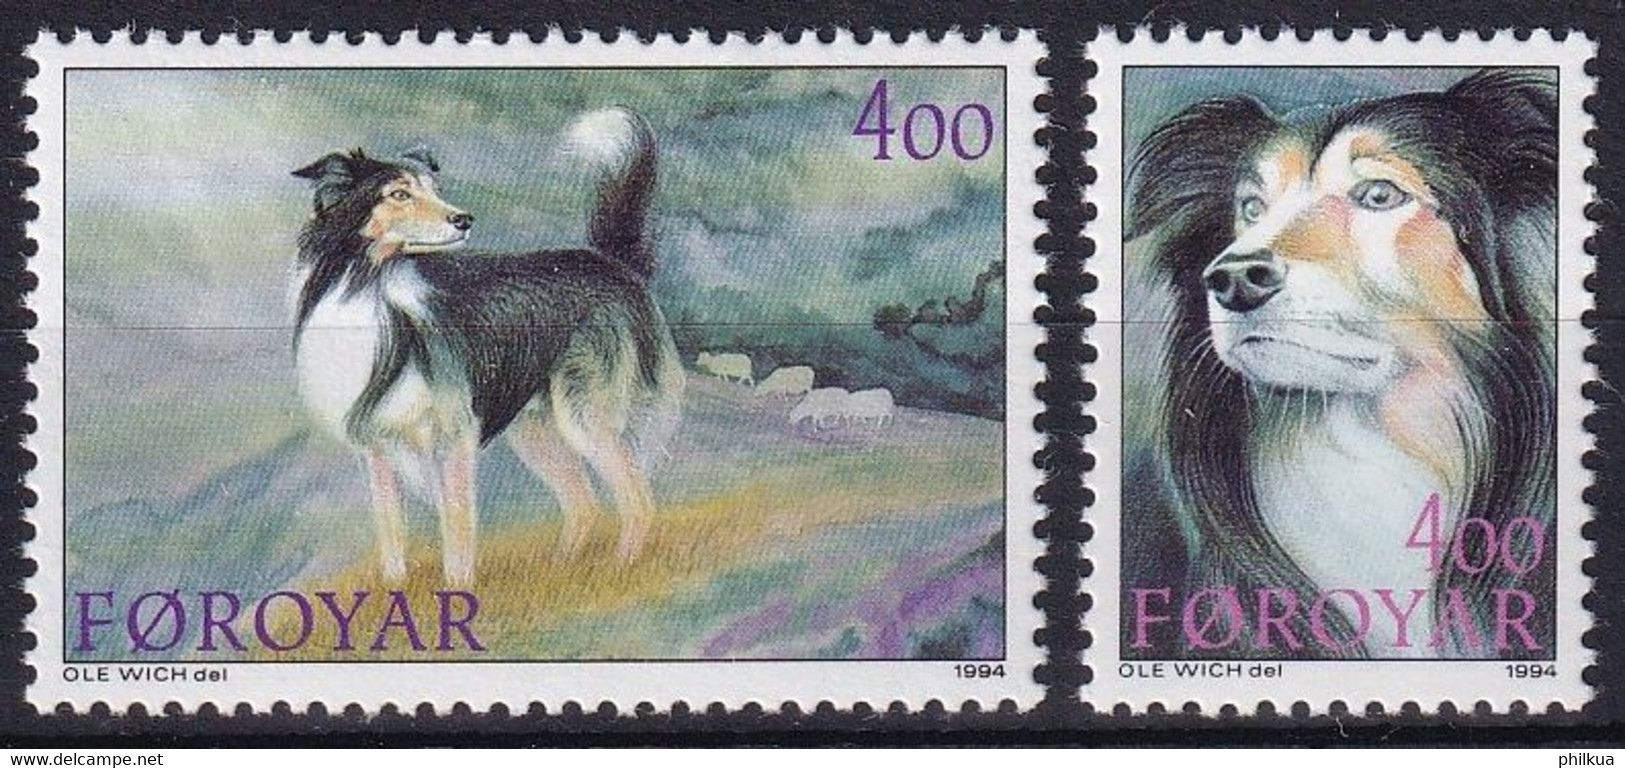 MiNr. 262 - 263 Dänemark Färöer 1994, 6. Juni. Hütehunde Postfrisch/**/MNH - Färöer Inseln